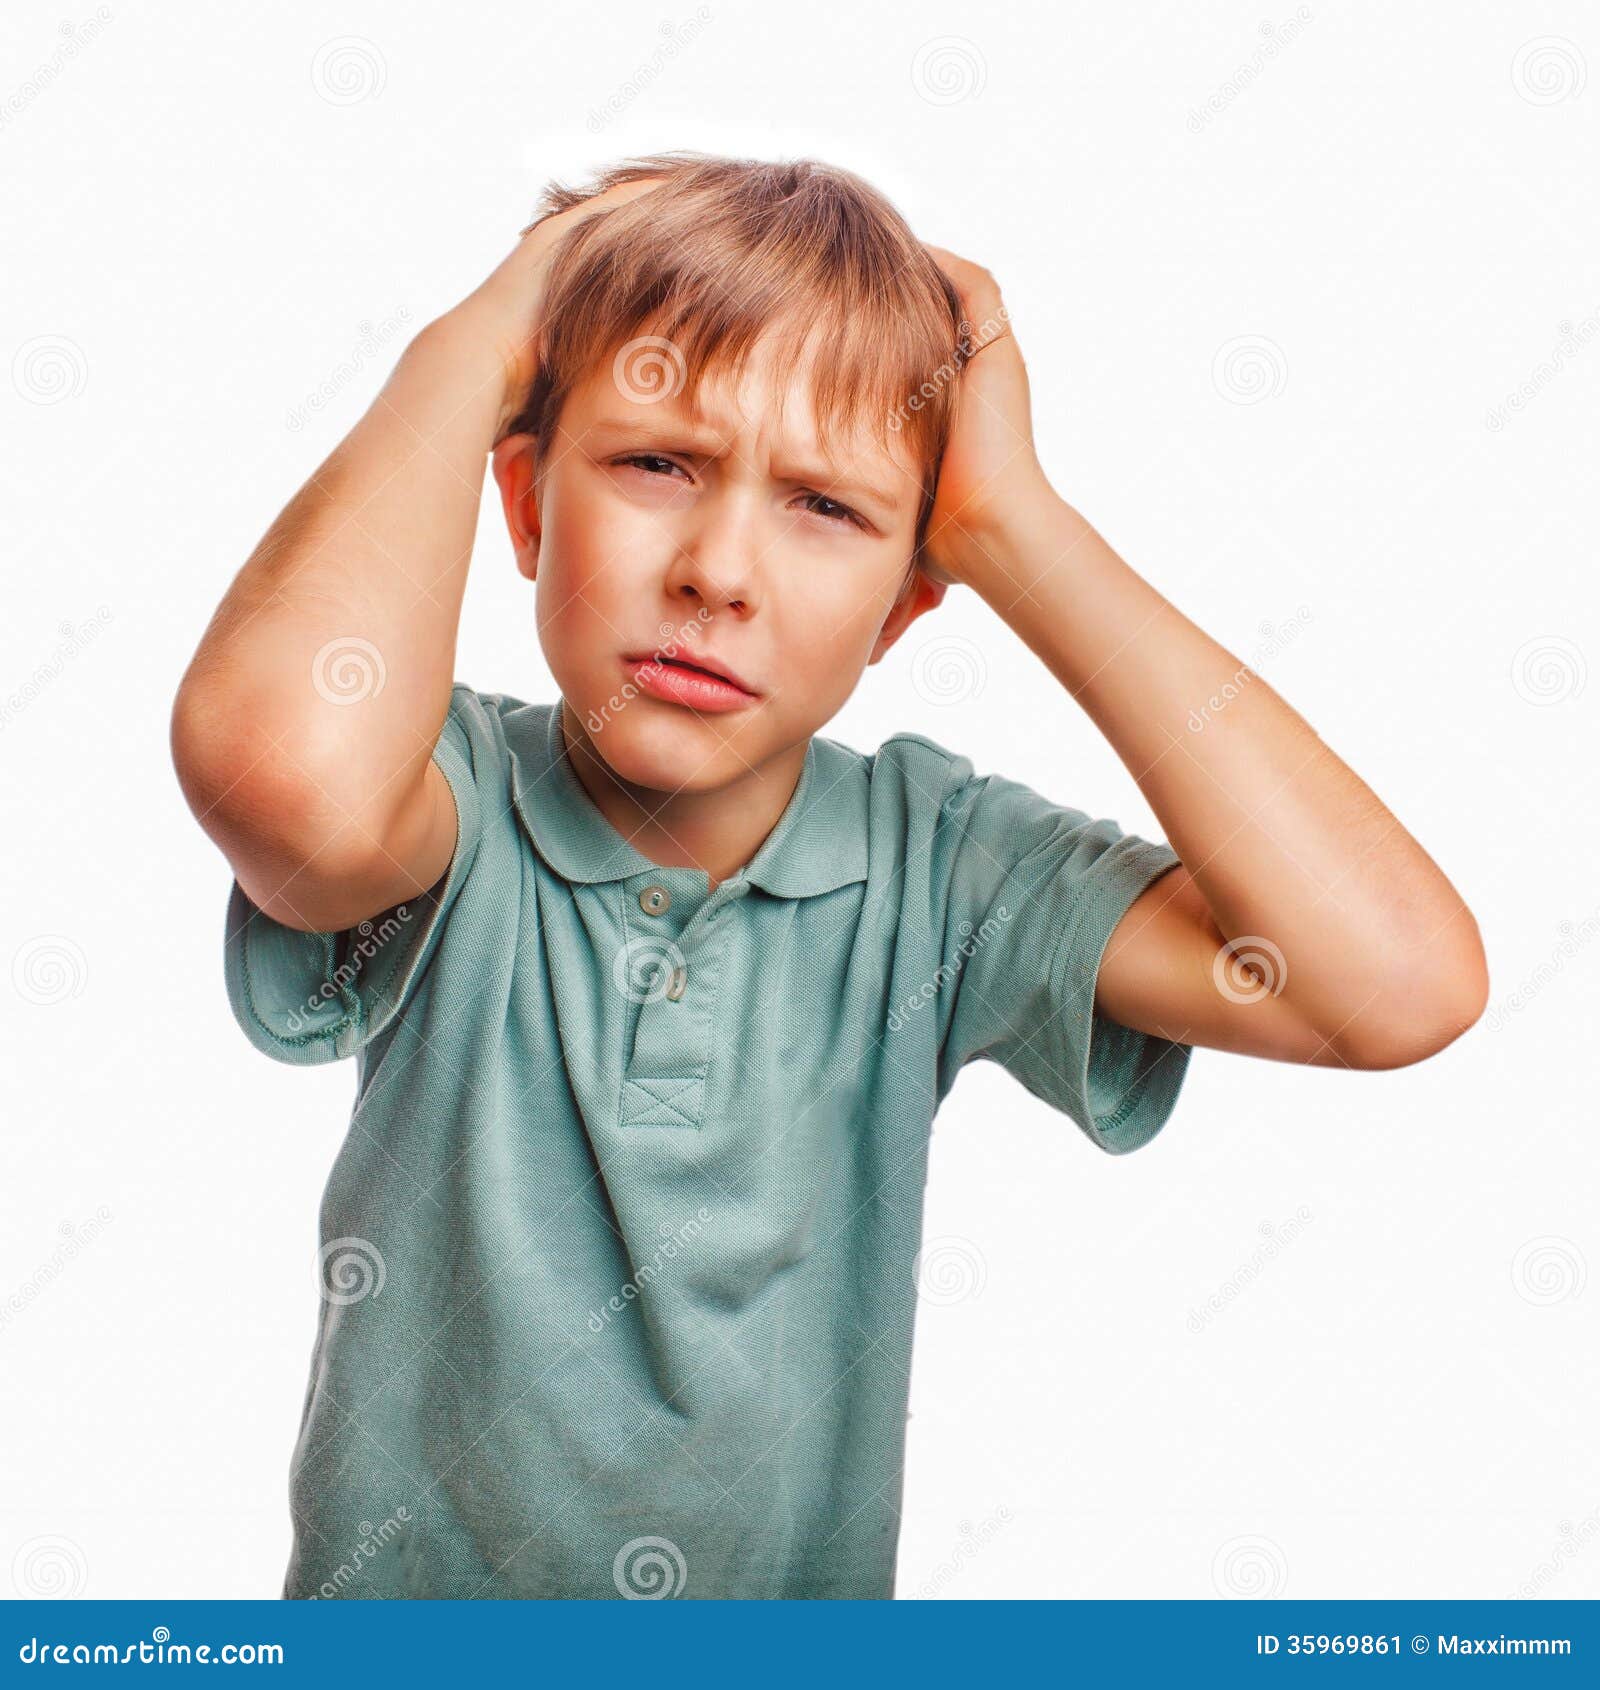 Boy Child Sad Angry Upset Kid Face Frustrated Stock Image - Image: 35969861